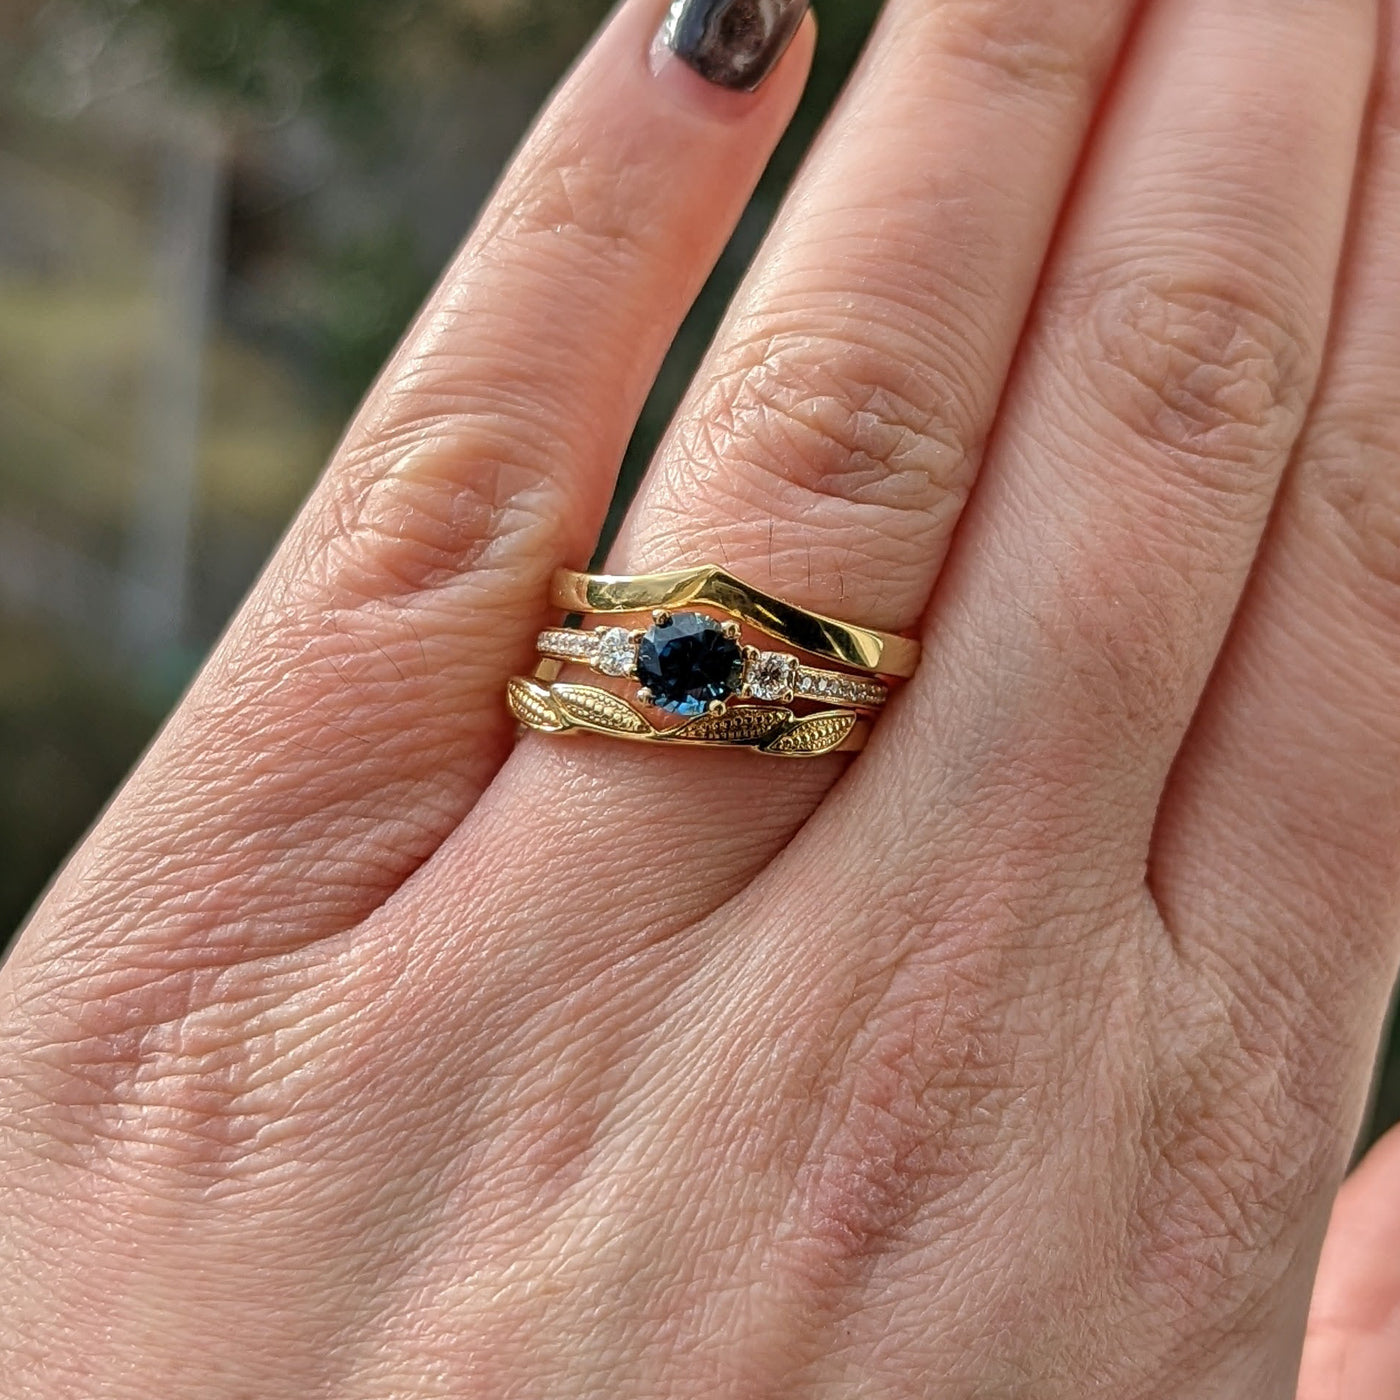 Clara - Polished Wishbone Shaped Wedding Ring 2.3mm Width - Made-to-Order